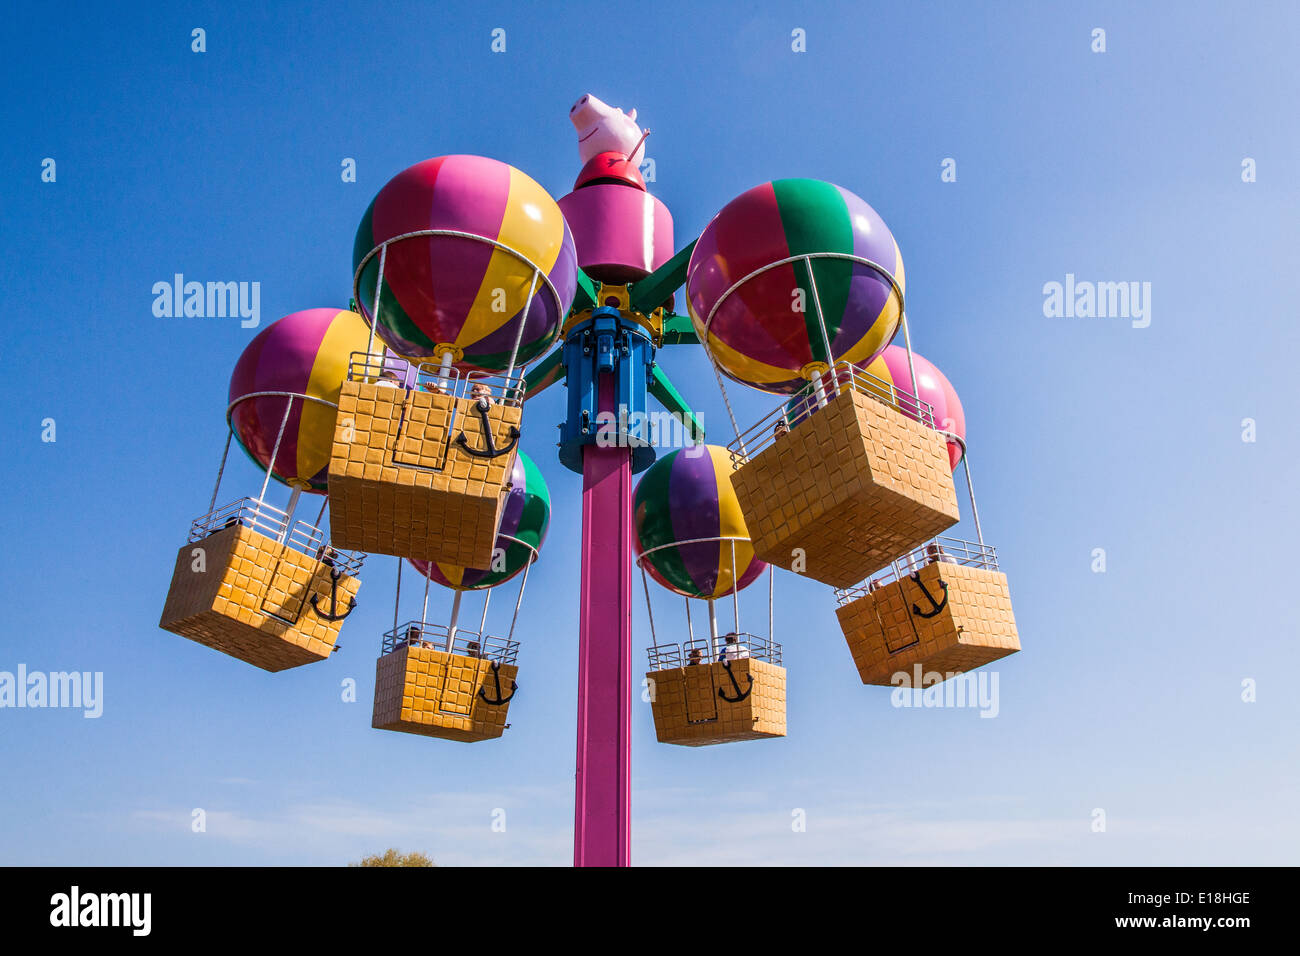 Peppa Pigs balloon ride at Peppa Pig world, Paultons Park,Romsey, Southampton, England, United Kingdom. Stock Photo